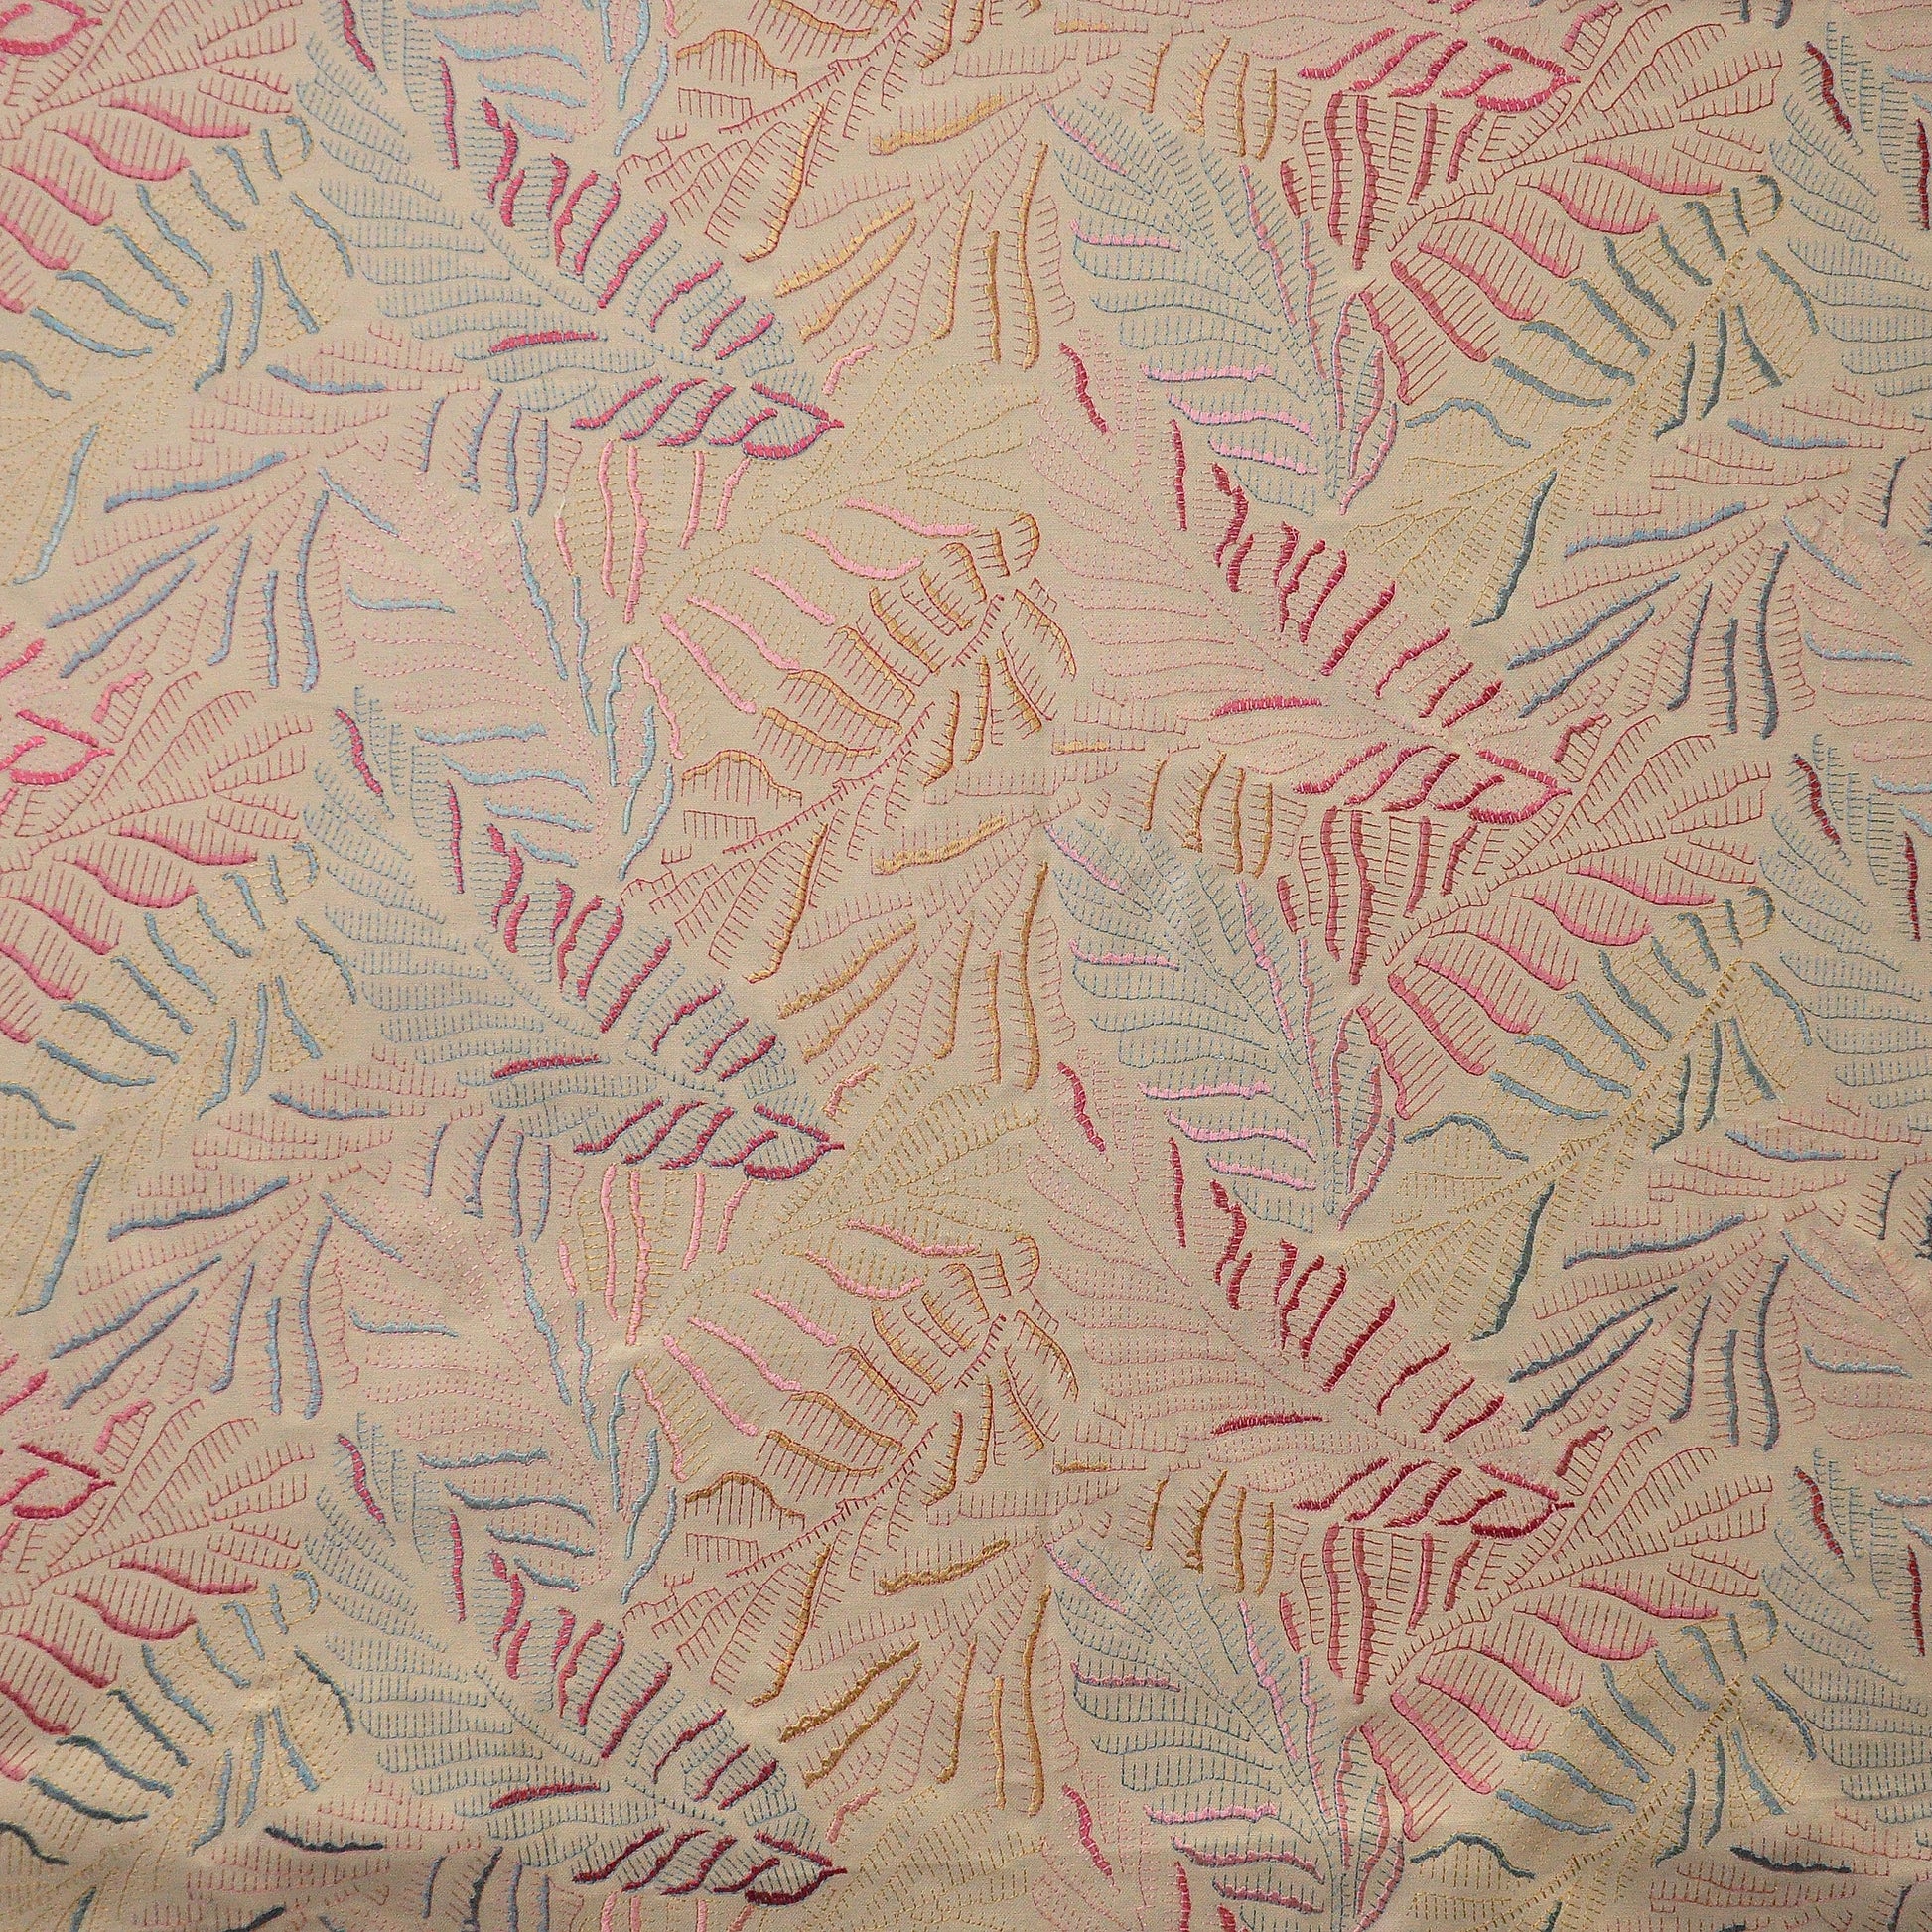 Purchase Maxwell Fabric - Hazelden, # 717 Hibiscus